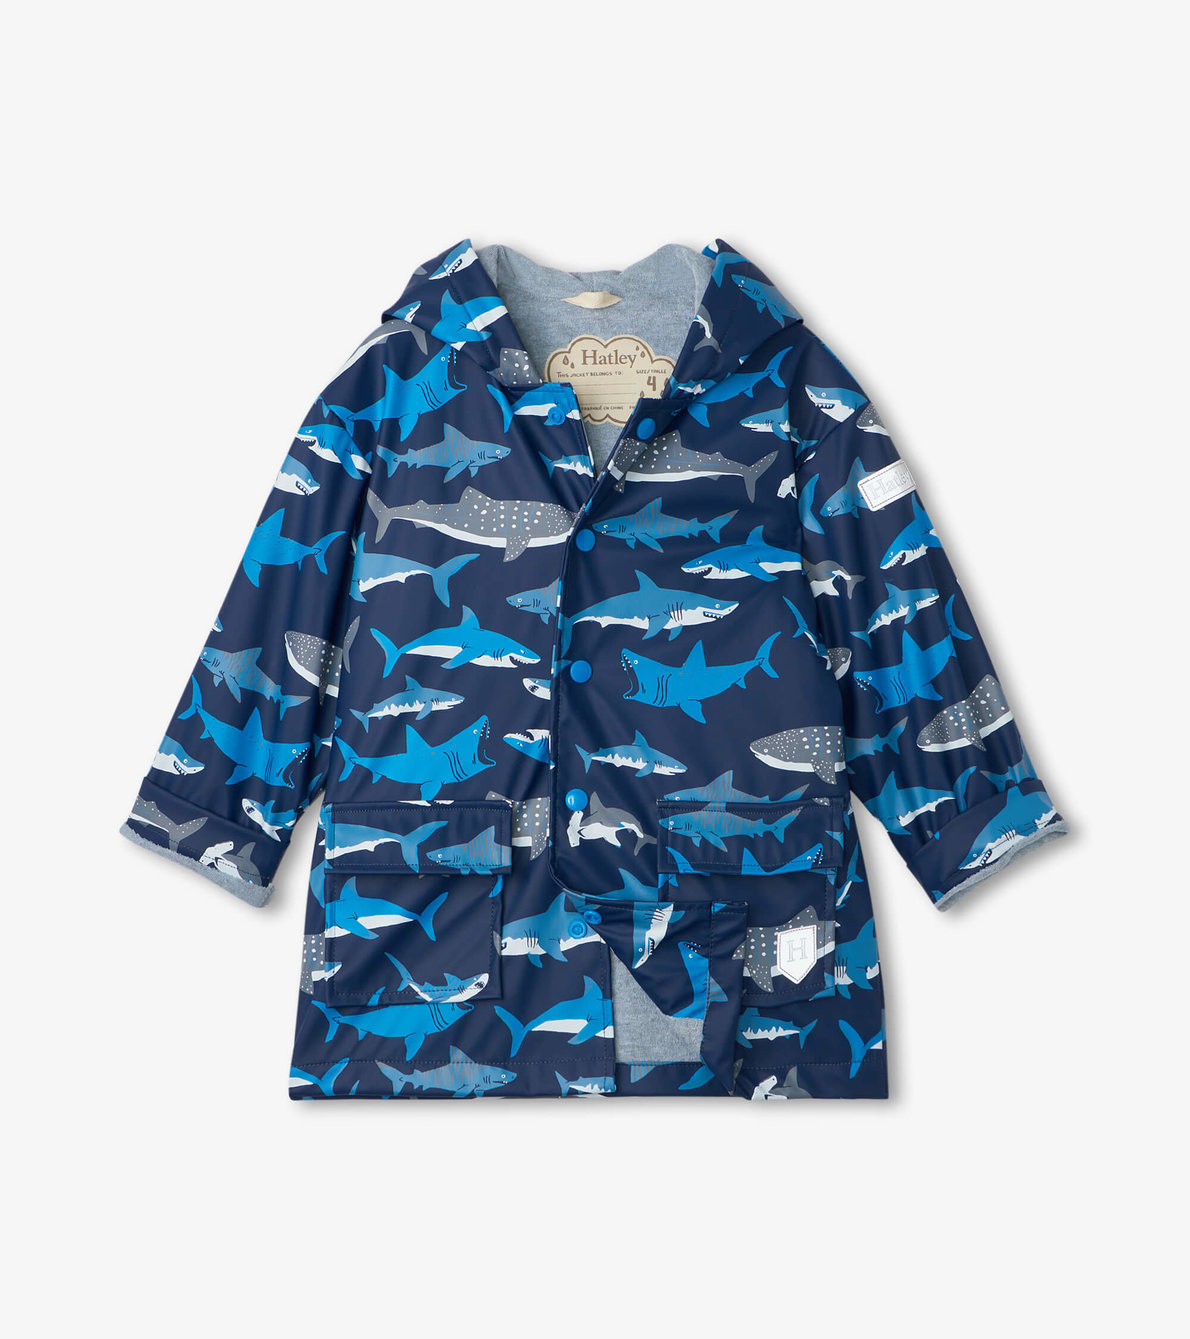 View larger image of Shark School Raincoat